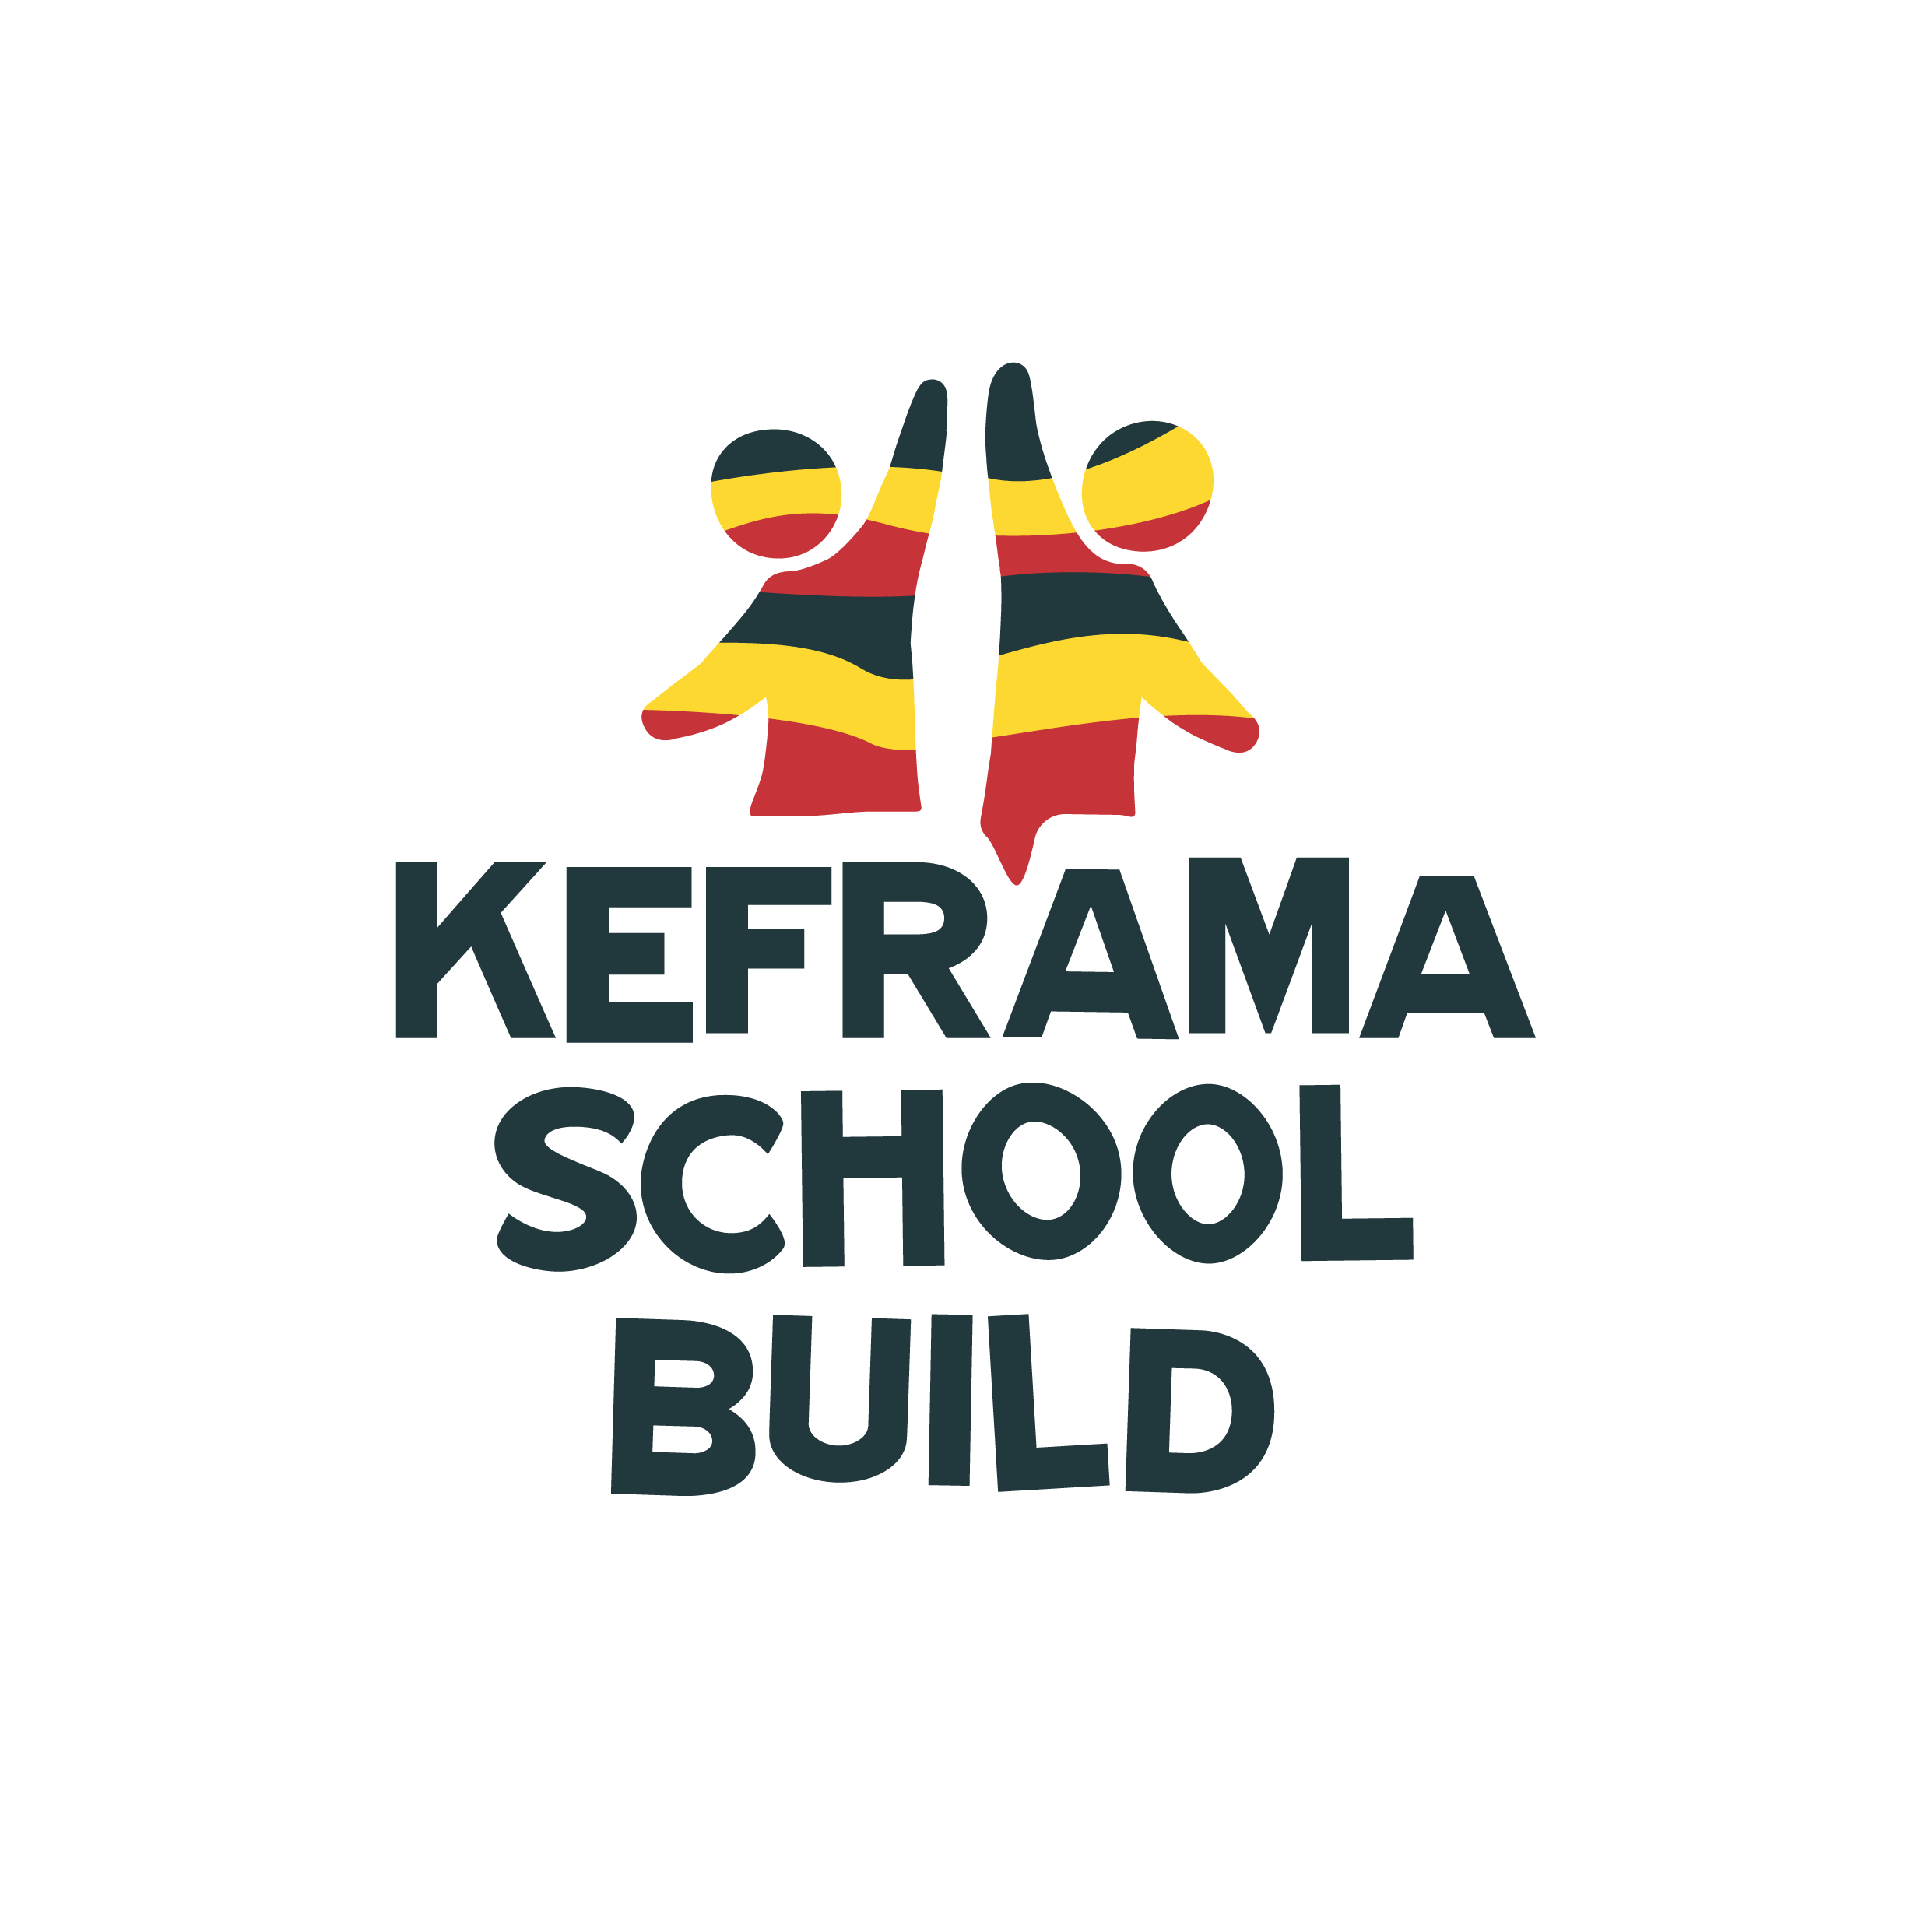 Keframa School Build